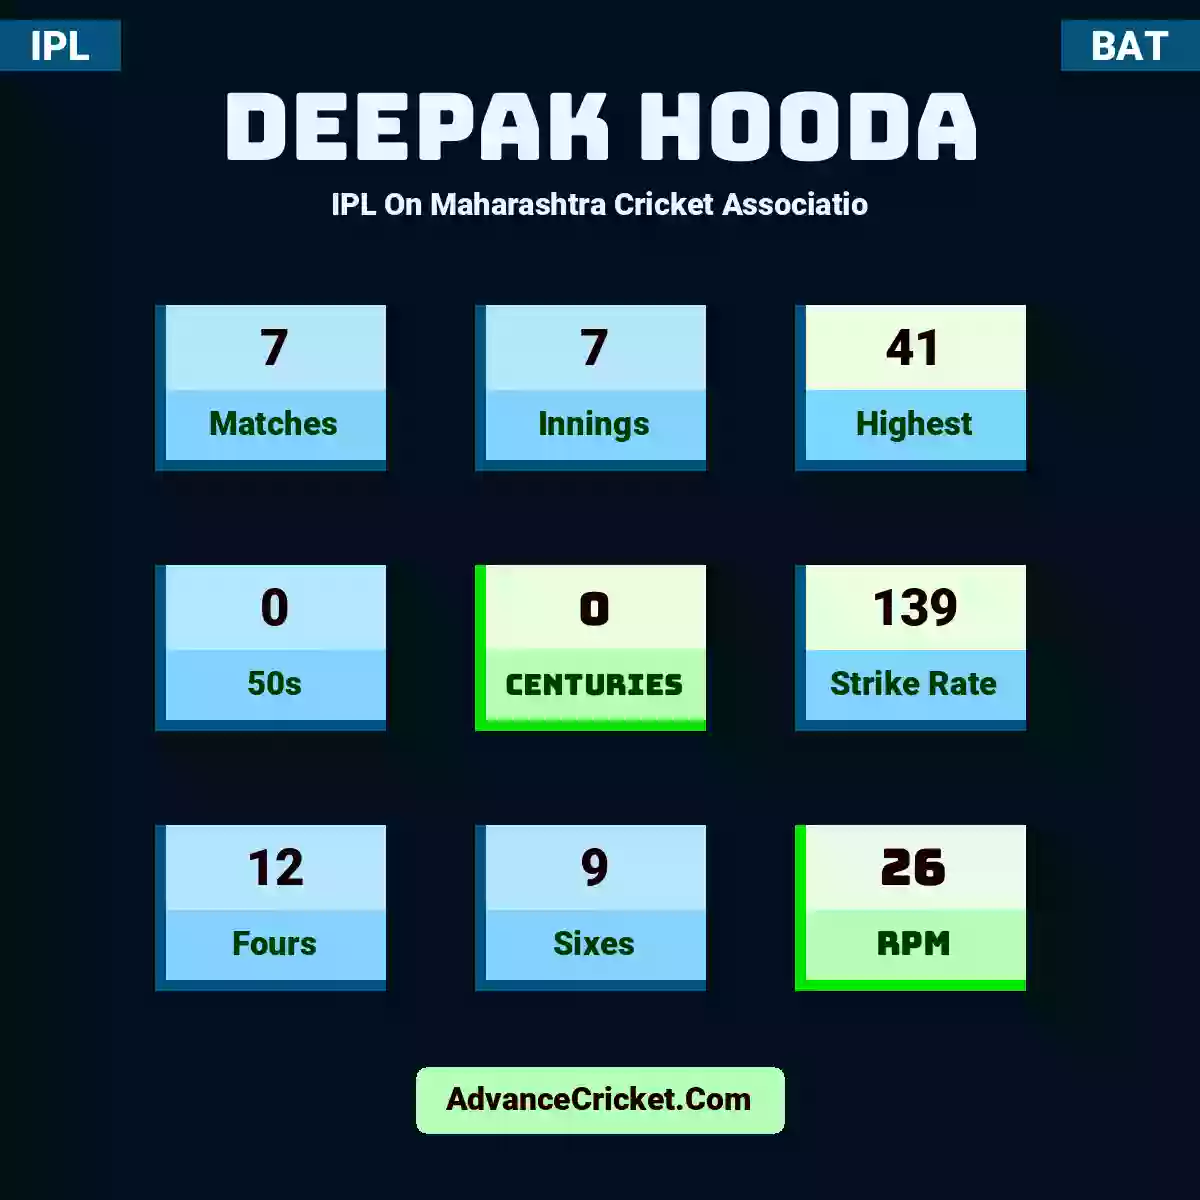 Deepak Hooda IPL  On Maharashtra Cricket Associatio, Deepak Hooda played 7 matches, scored 41 runs as highest, 0 half-centuries, and 0 centuries, with a strike rate of 139. D.Hooda hit 12 fours and 9 sixes, with an RPM of 26.